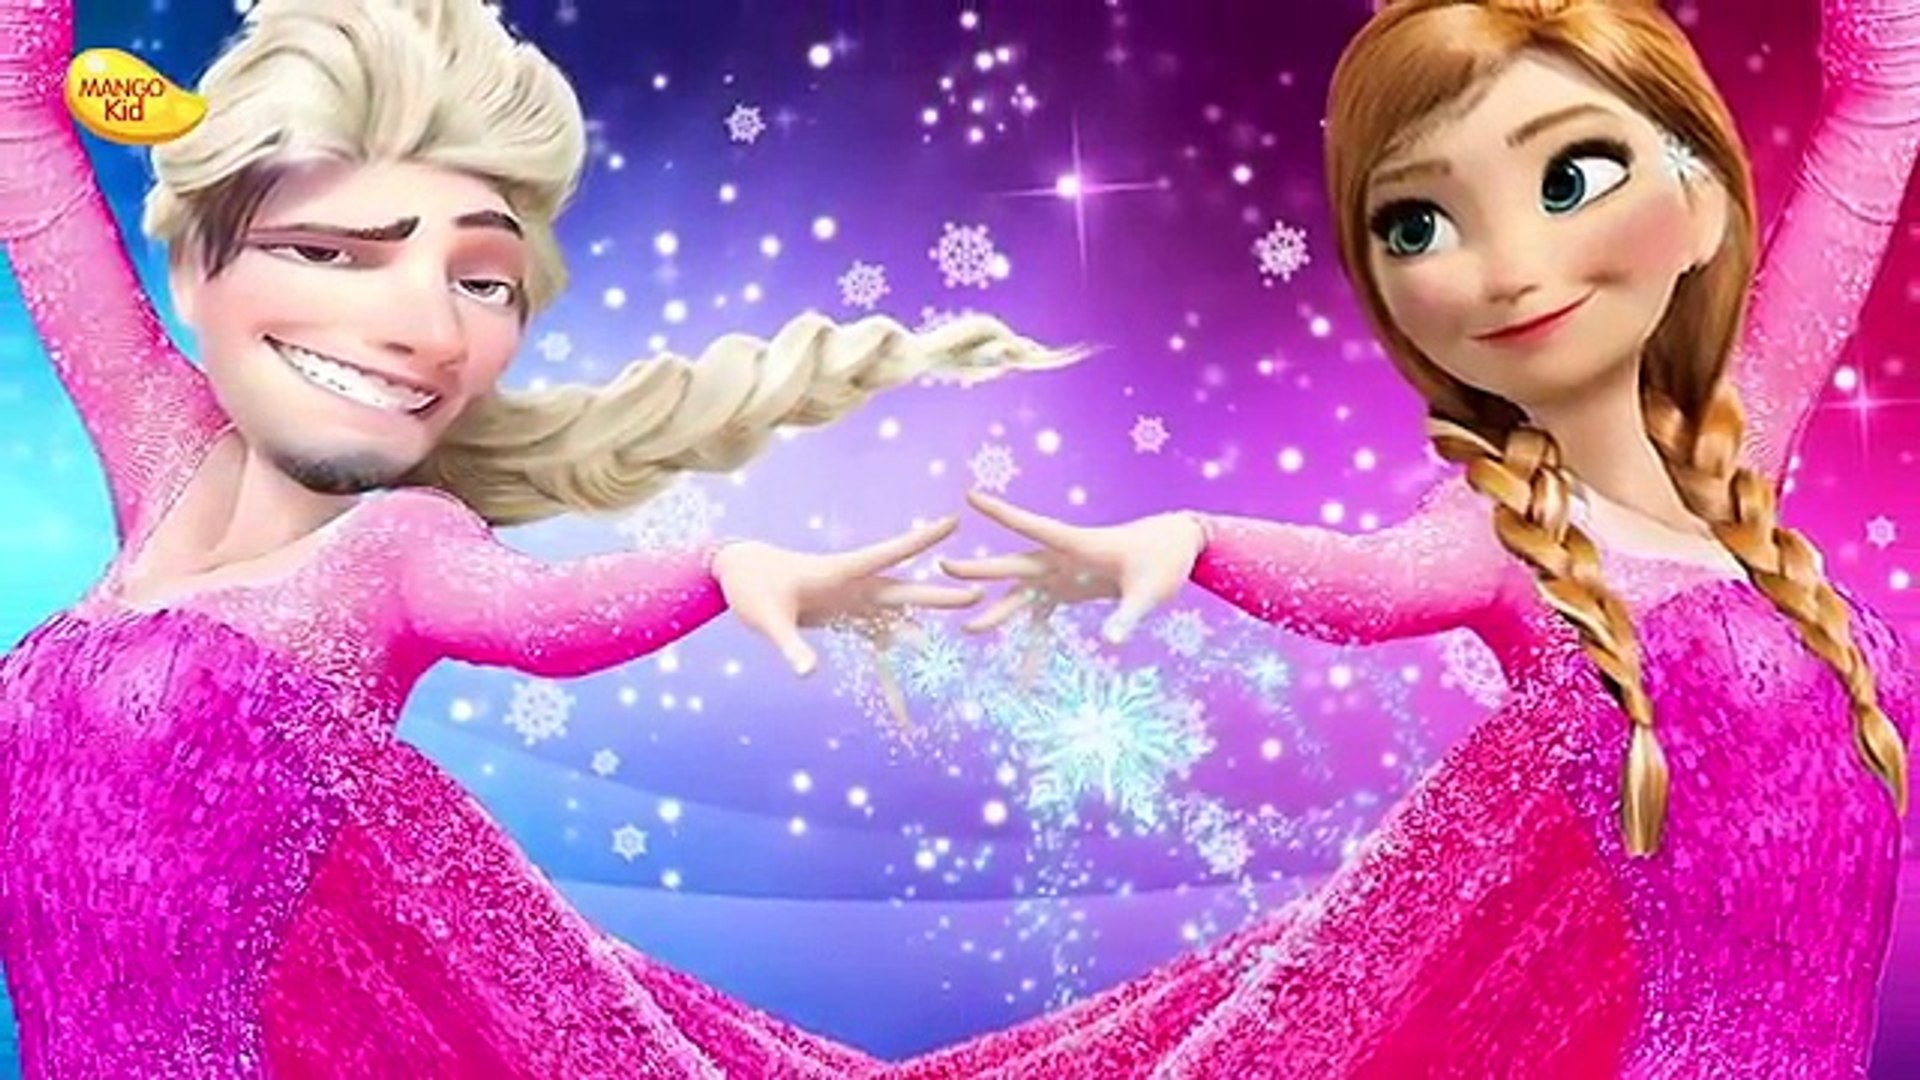 Captain Underpants Face Swaps Boss Baby Despicable Me Frozen Elsa Disney Princess Try Not To Laugh Video Dailymotion